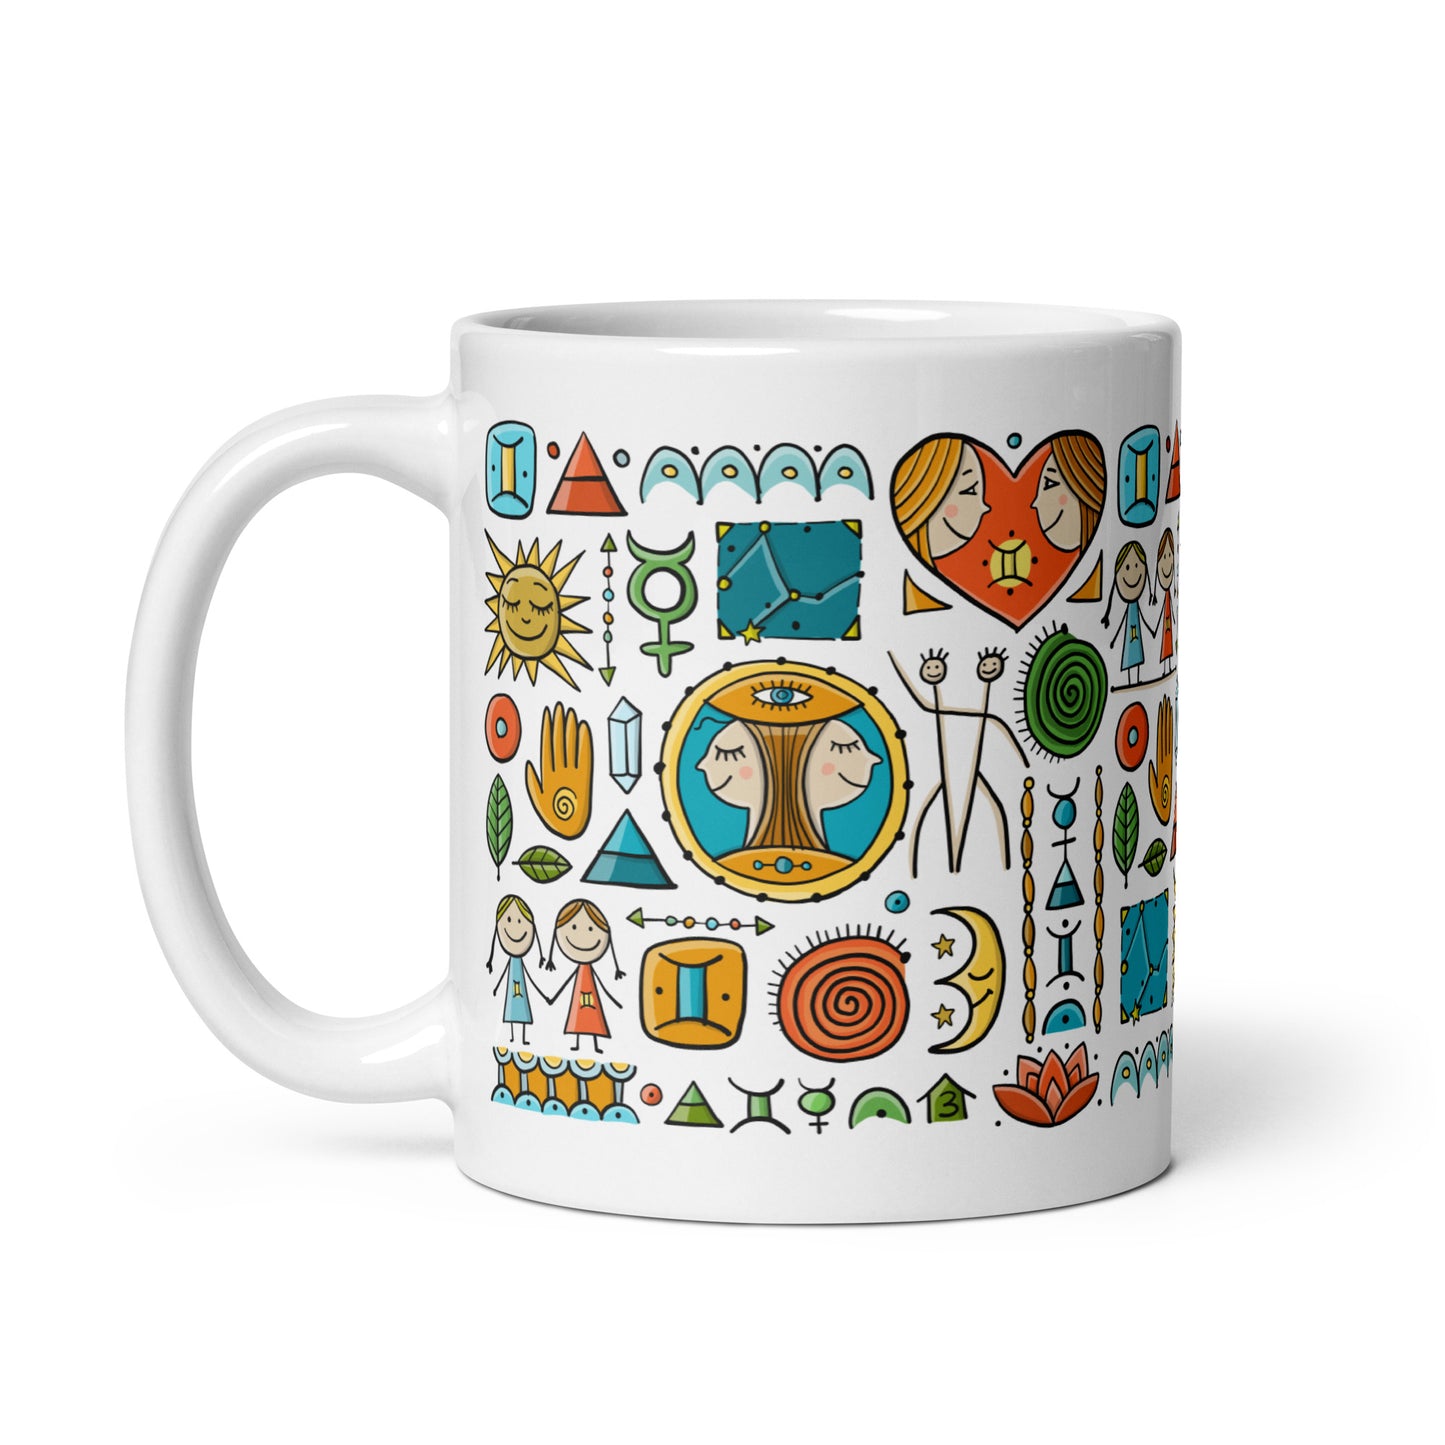 Gemini Zodiac Mug 11 oz: A white ceramic mug featuring a Gemini zodiac symbol design for astrology enthusiasts. Great gift idea for Gemini.